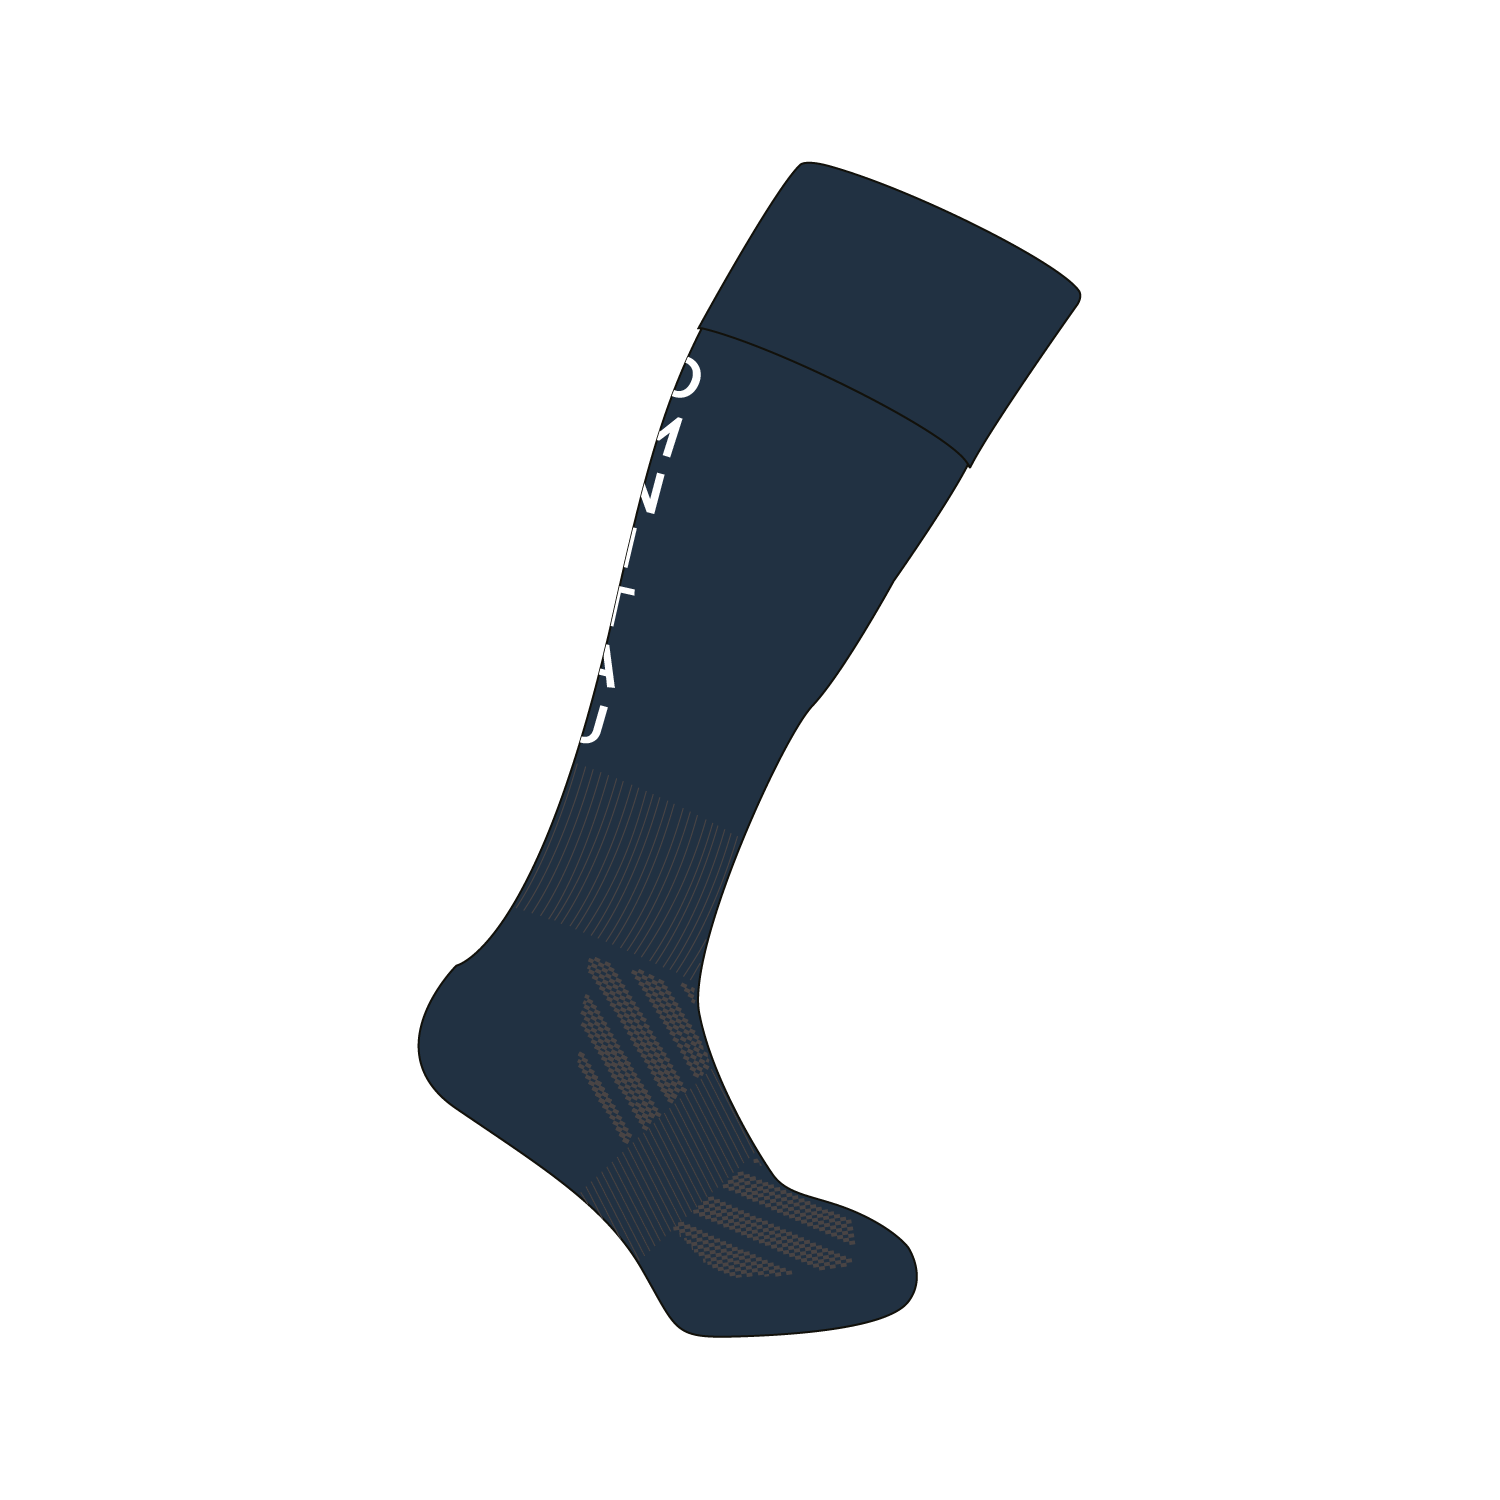 Omnitau Team Sports Unisex Plain Playing Socks - Navy with White Text